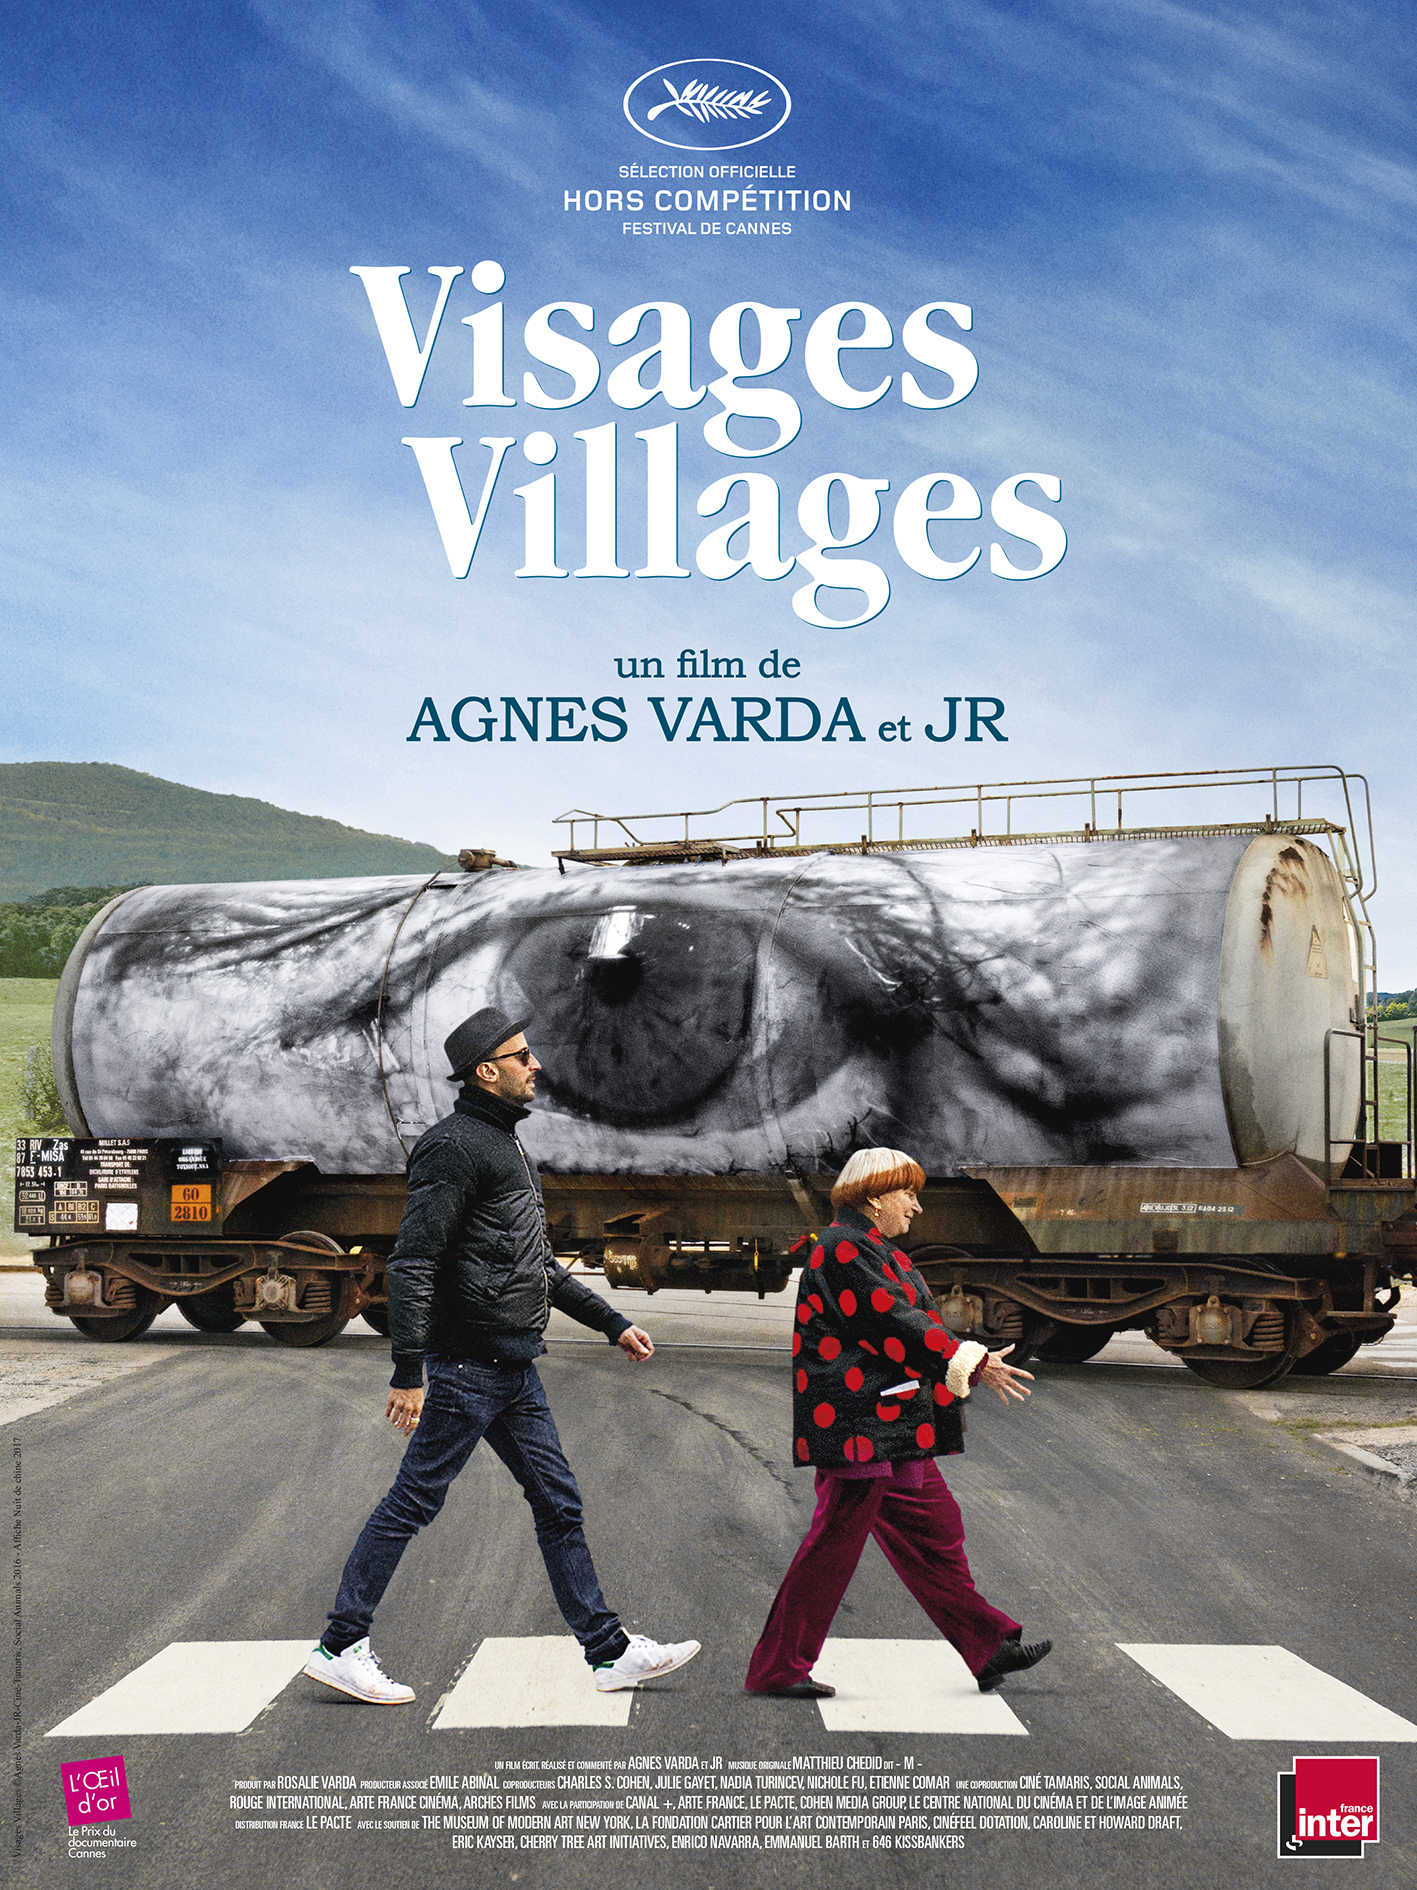 Visages Villages, il film di Agnès Varda e JR. Un ironico road-movie. Intervista